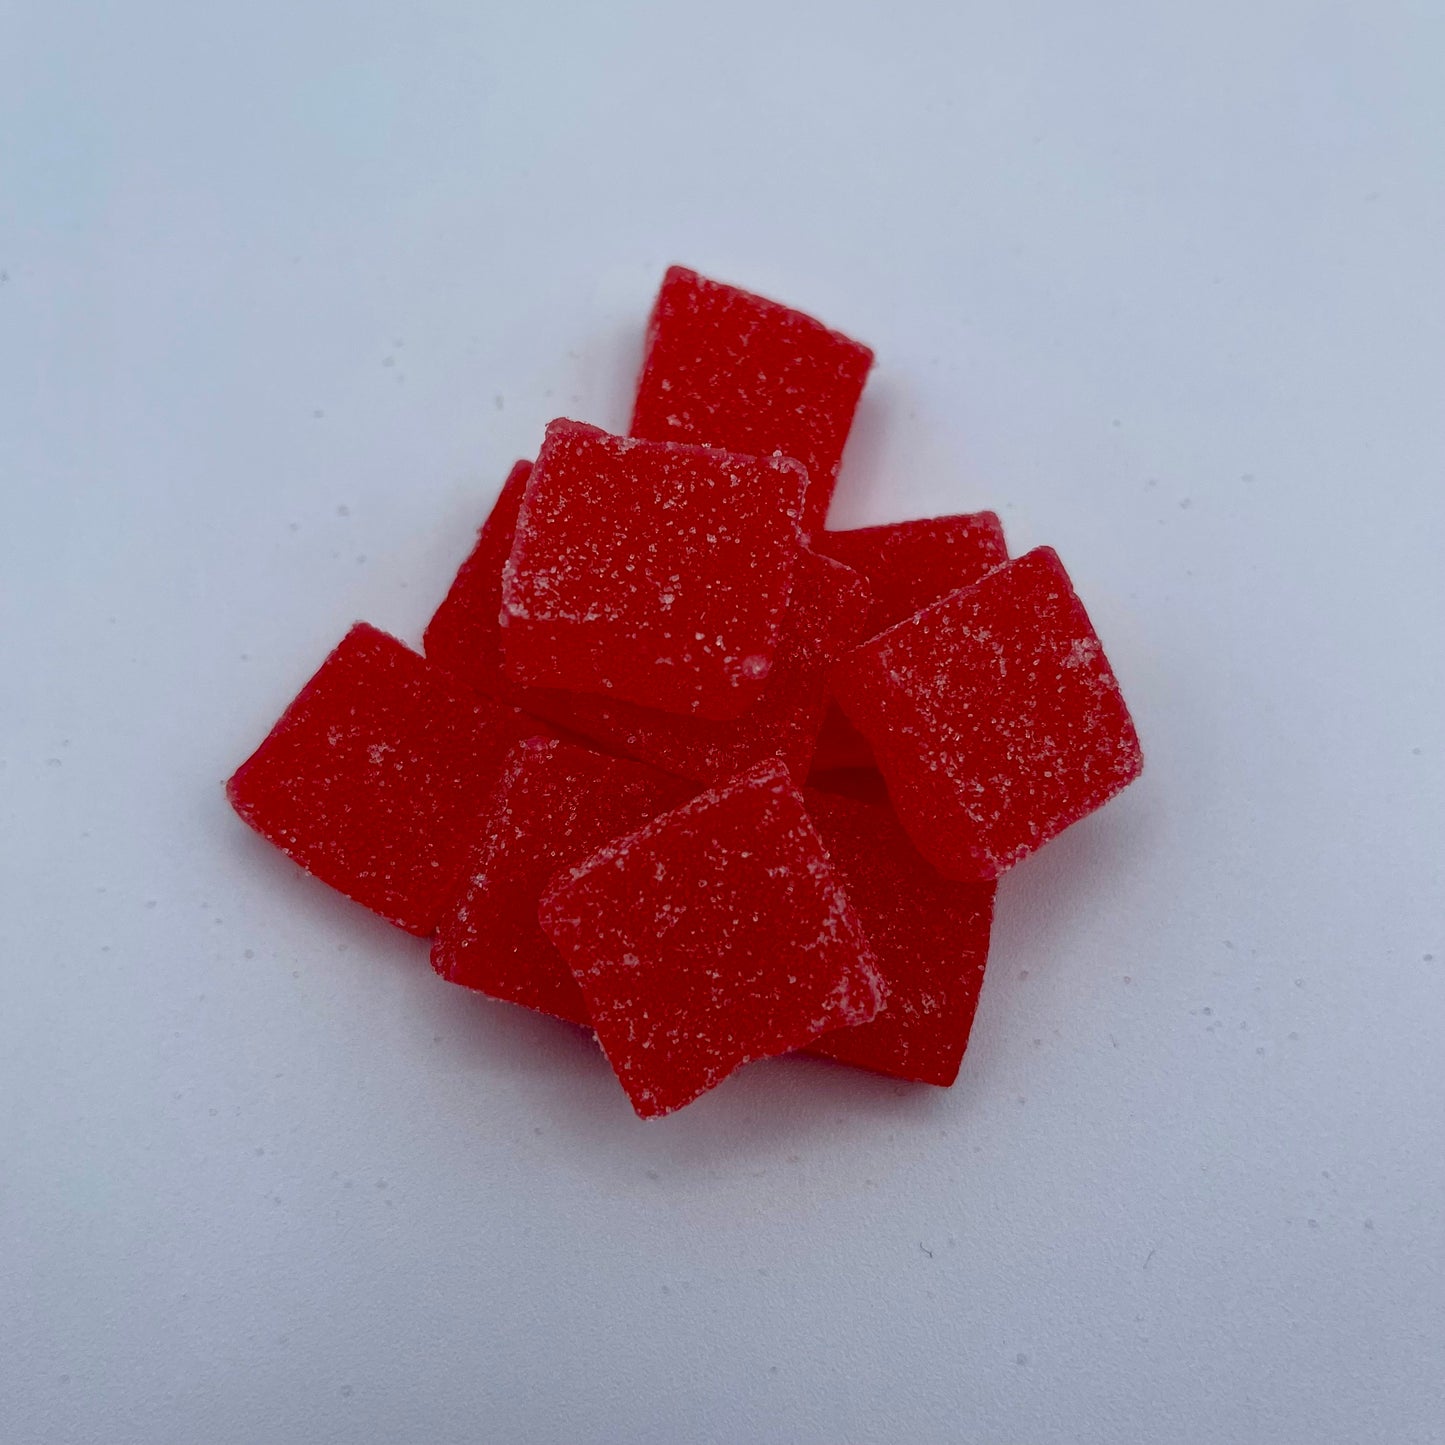 THC + CBD 100mg - Gummies 10 Pack of Edibles - Fruit Punch